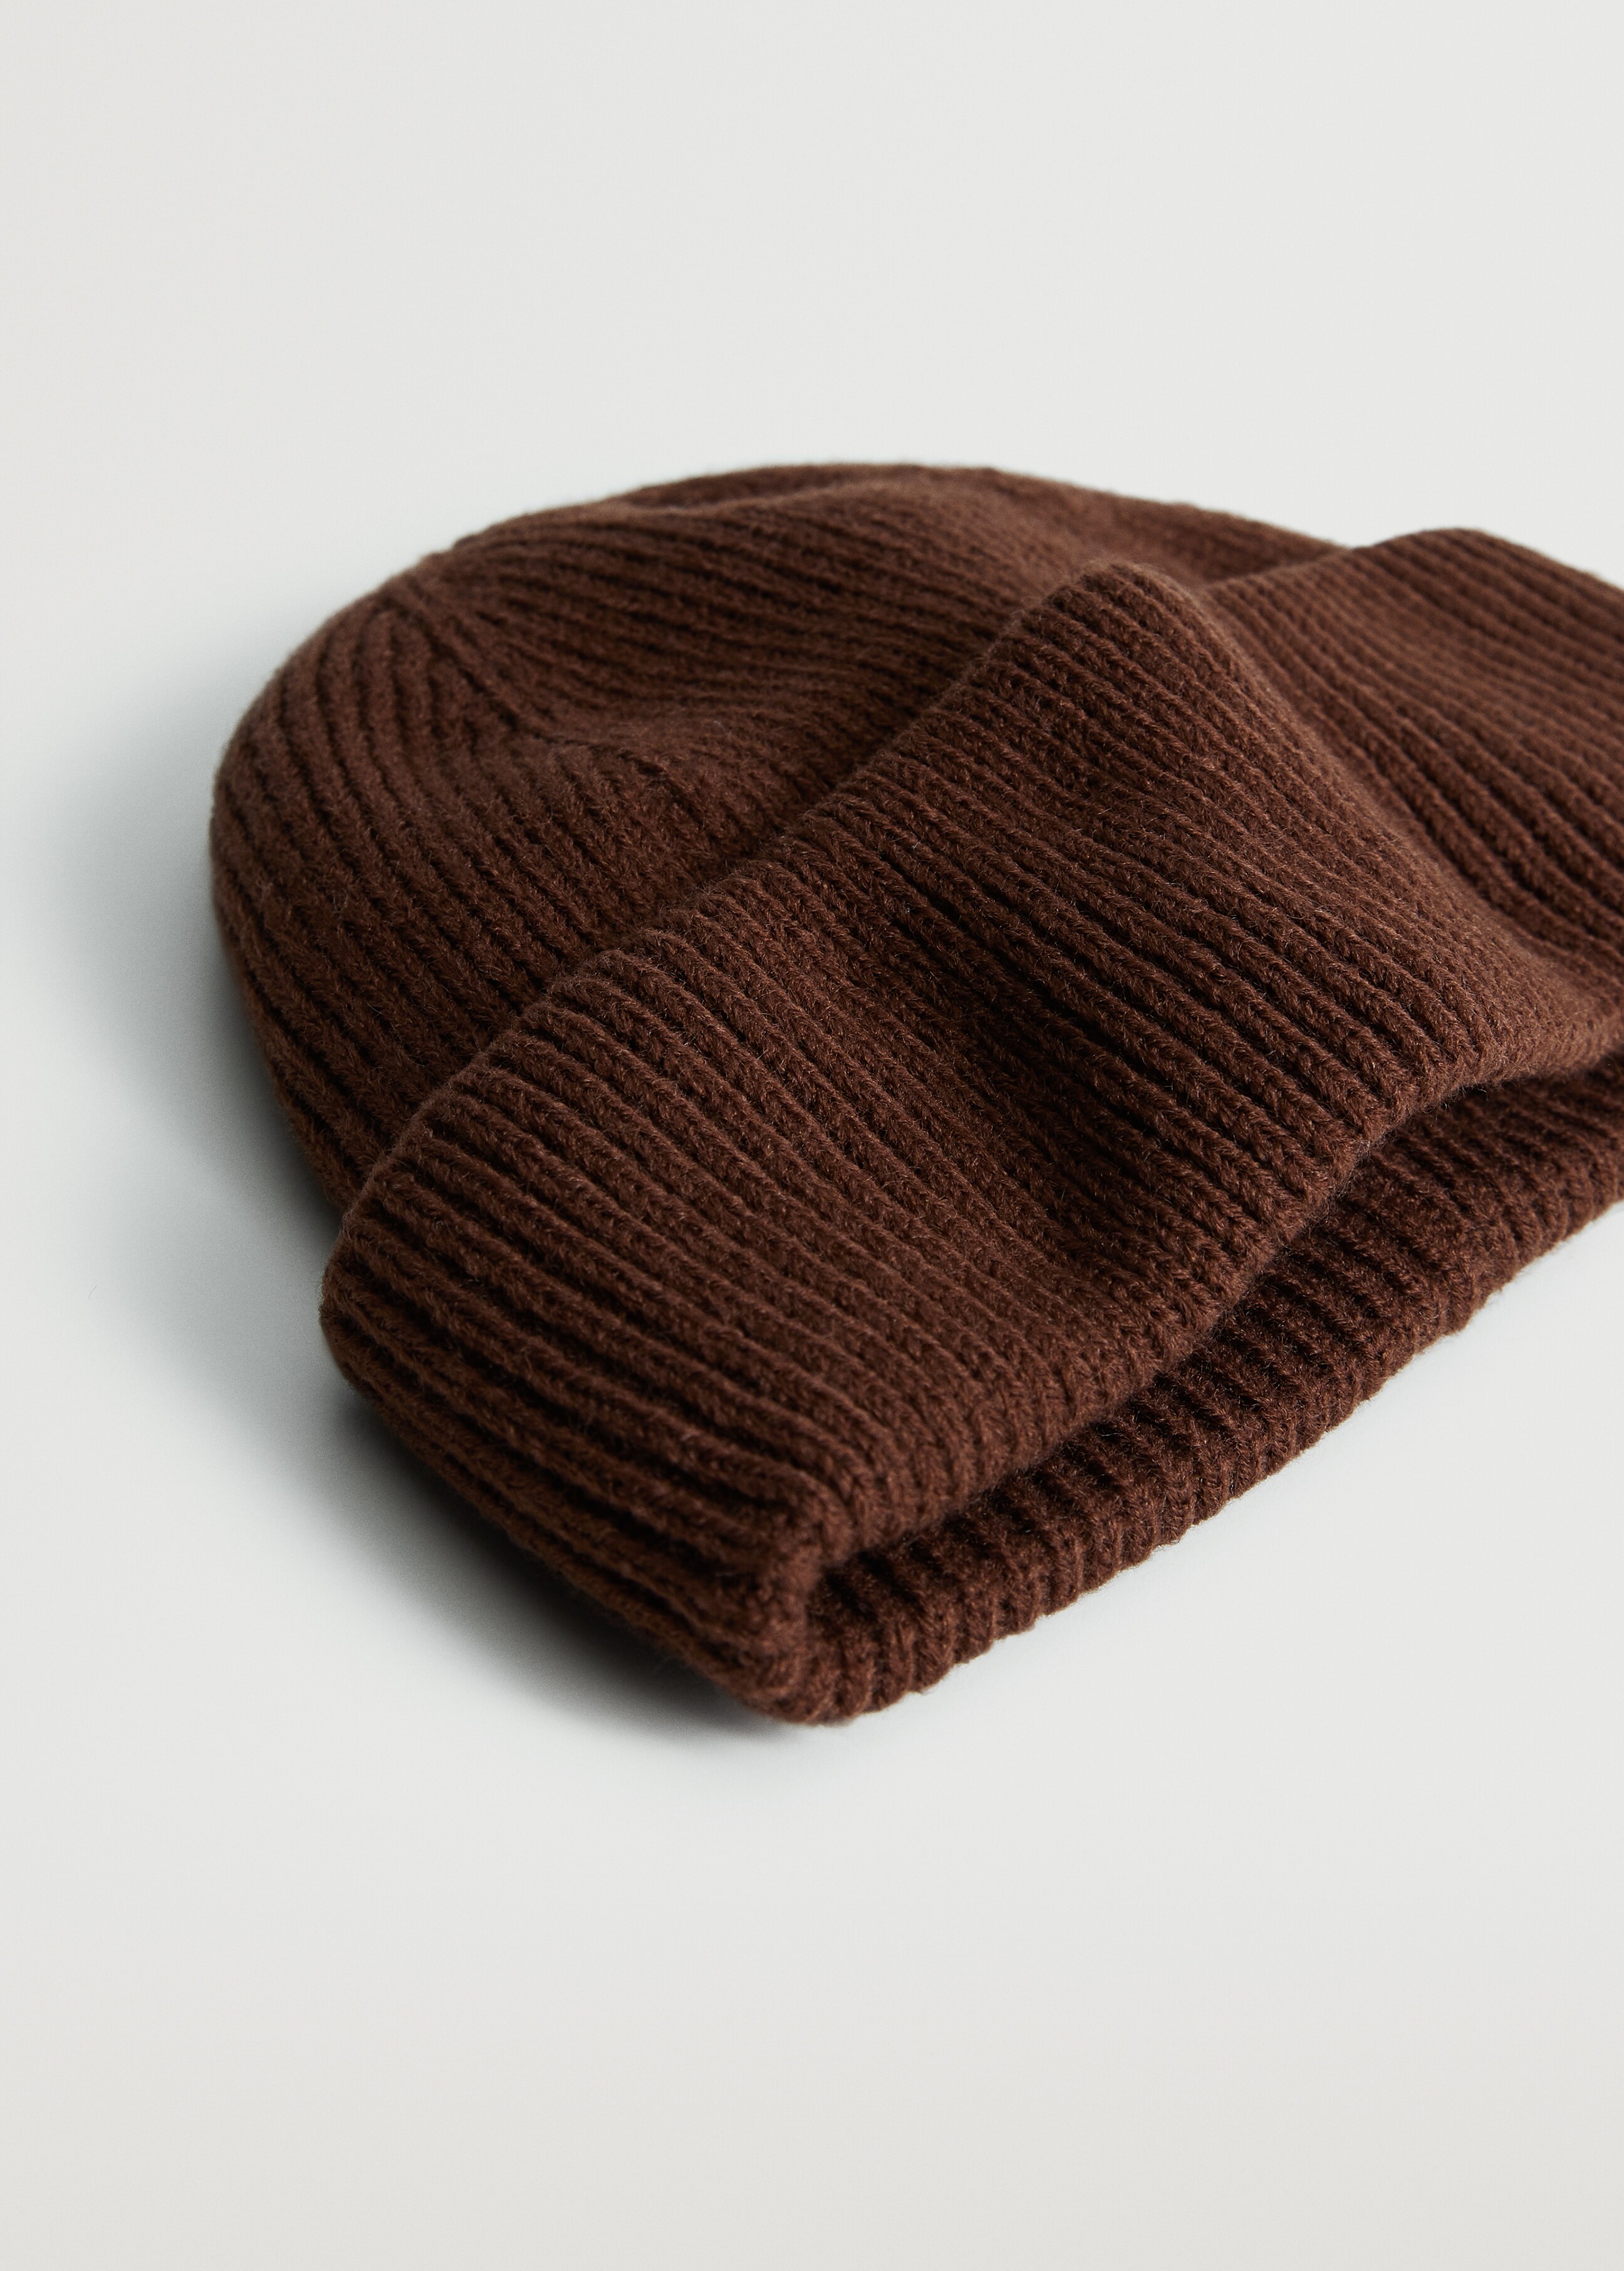 Short knitted hat - Medium plane